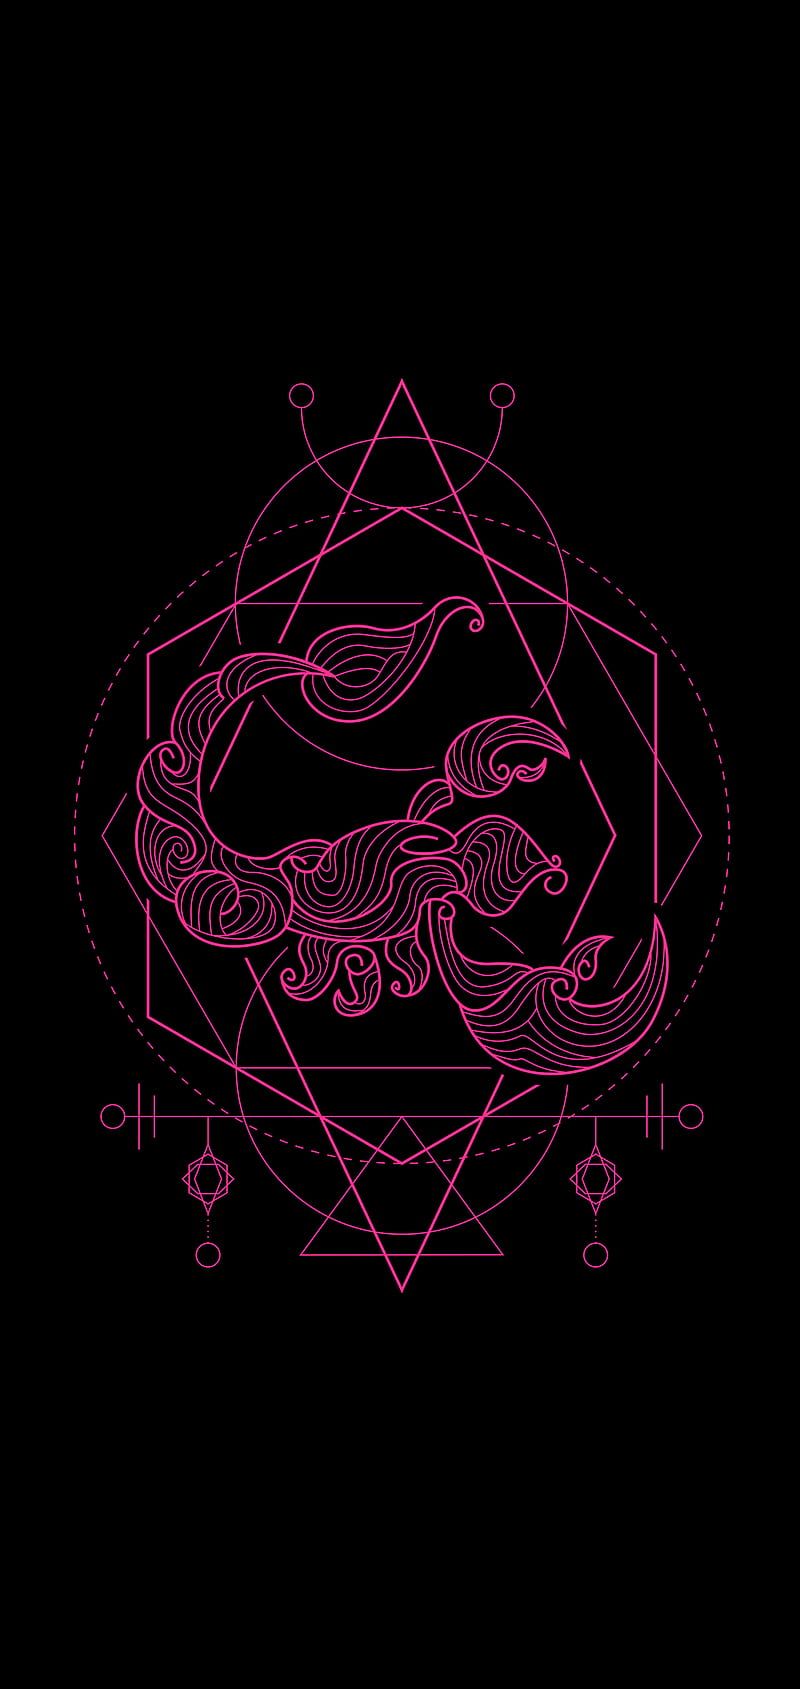 IPhone wallpaper of a pink geometric mermaid on a black background - Scorpio